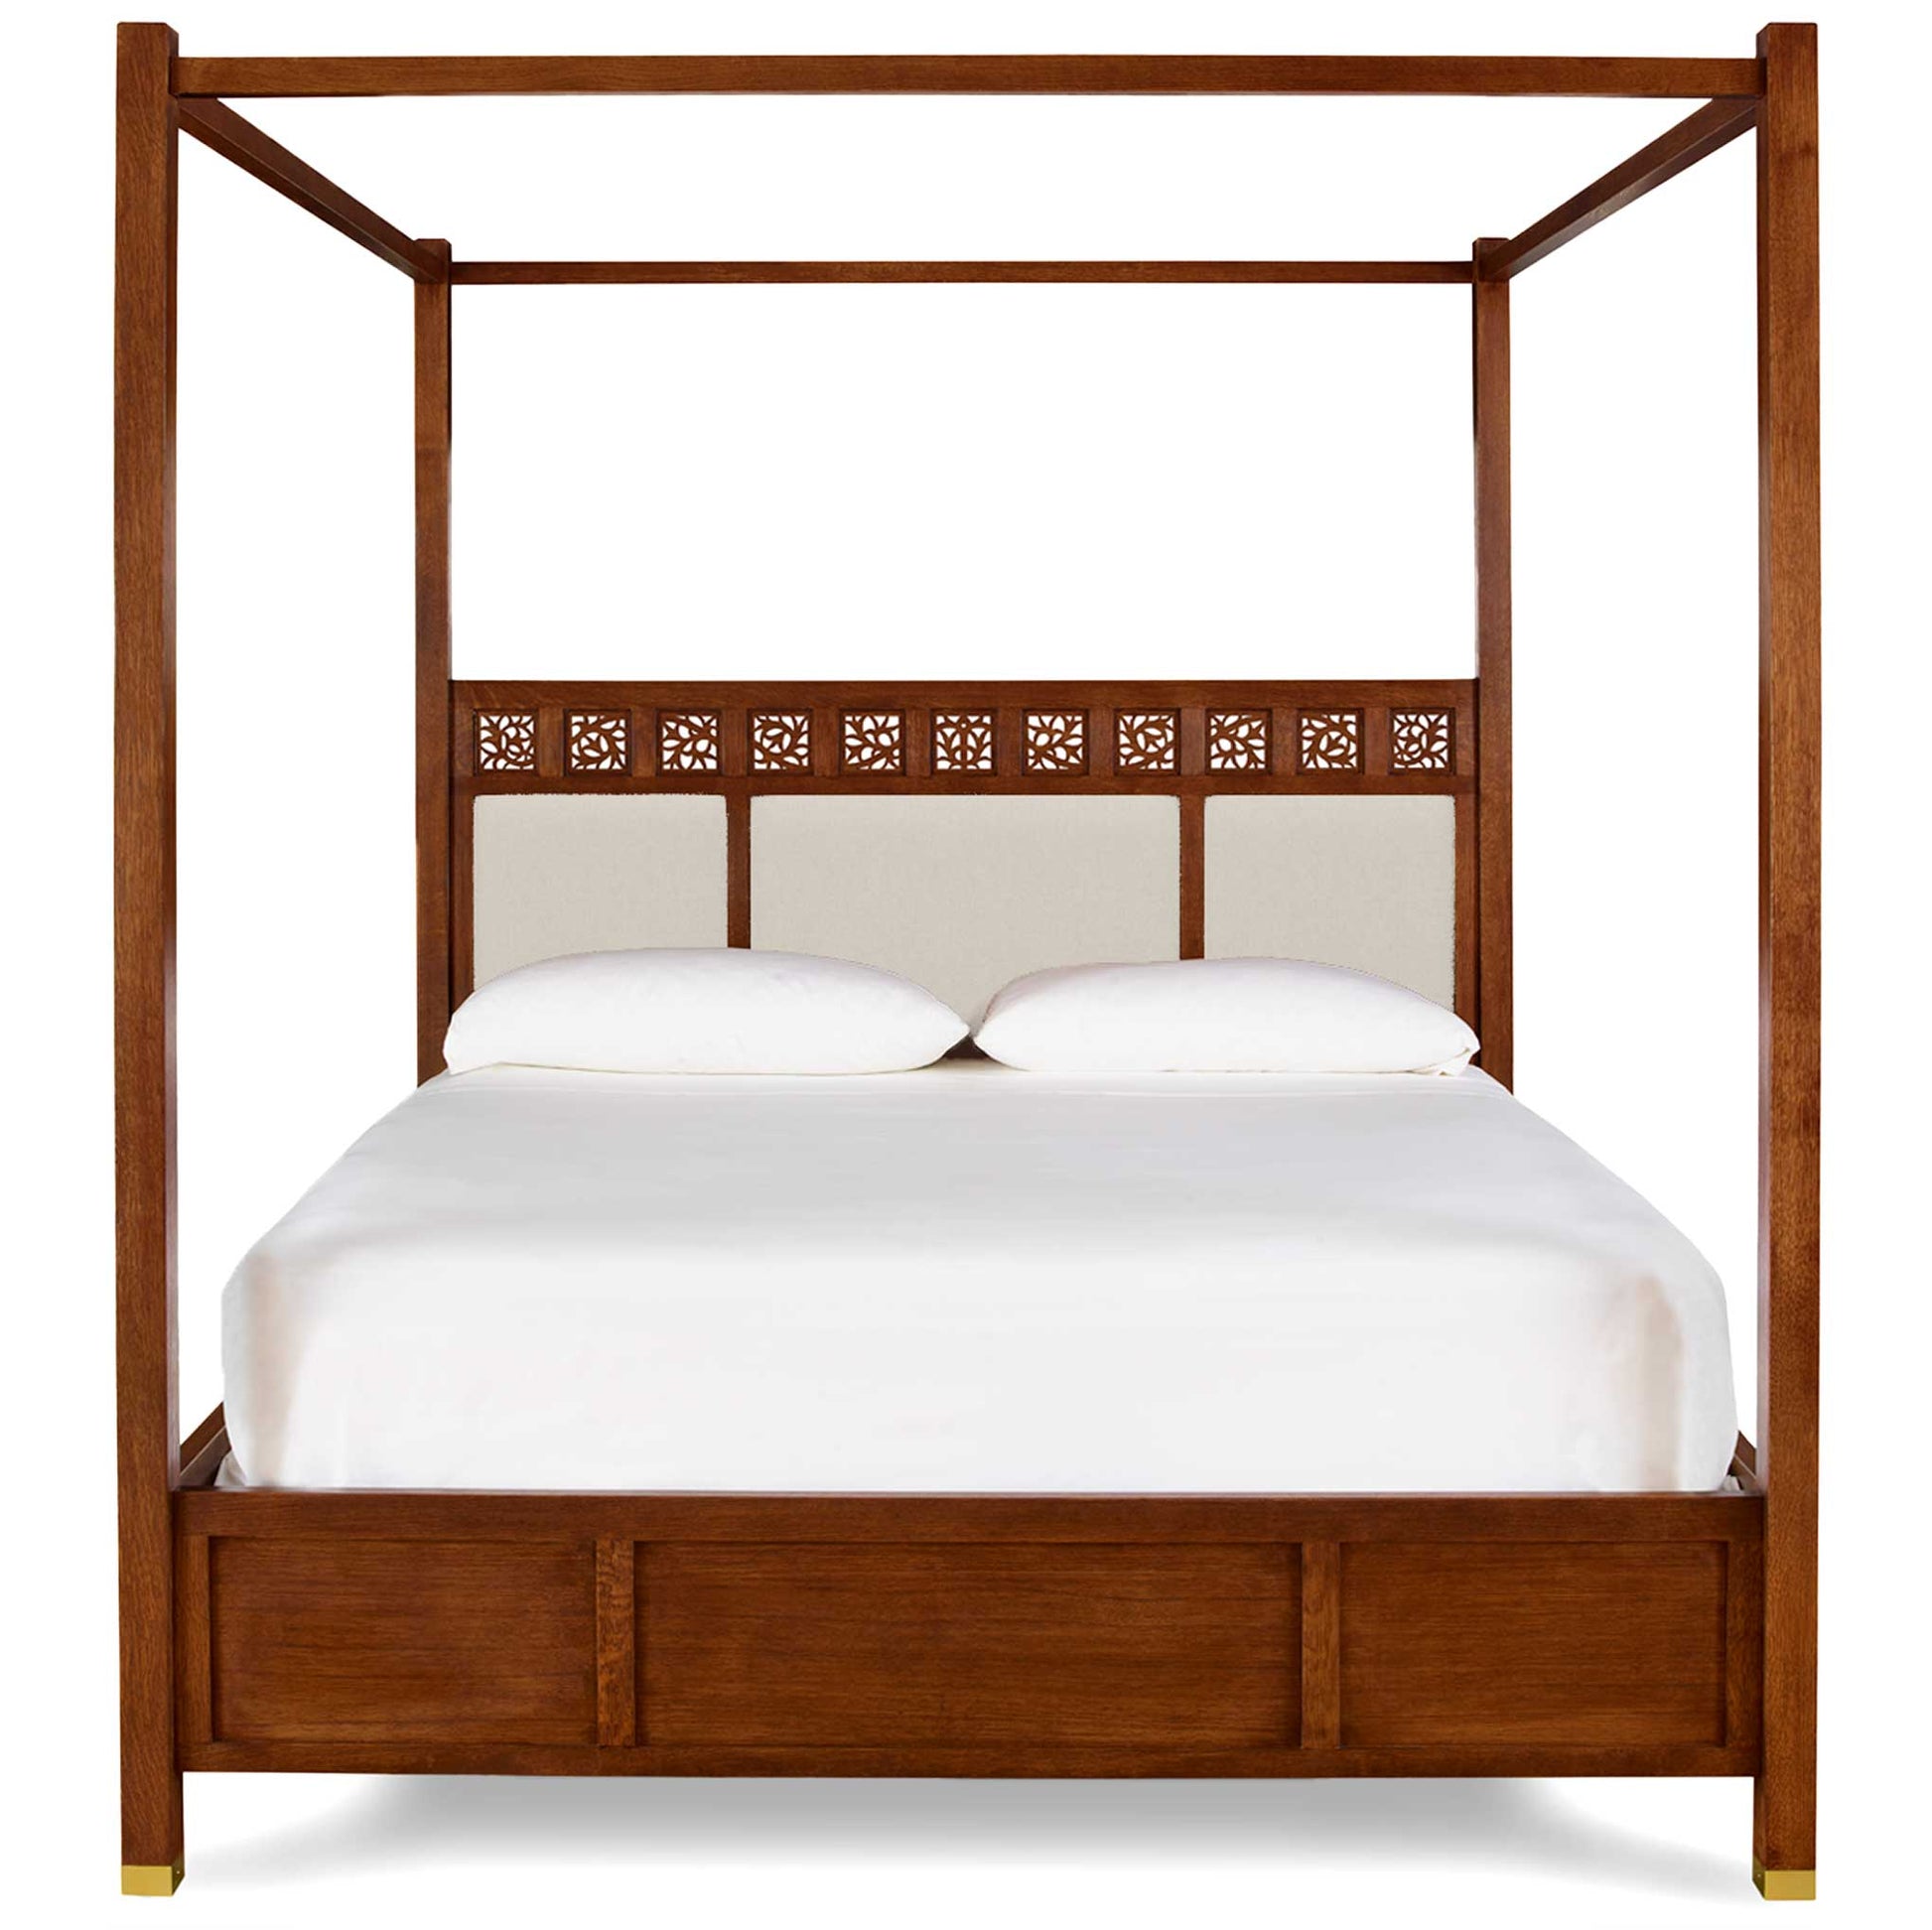 Surrey Hills Upholstered Four-Poster Bed, King